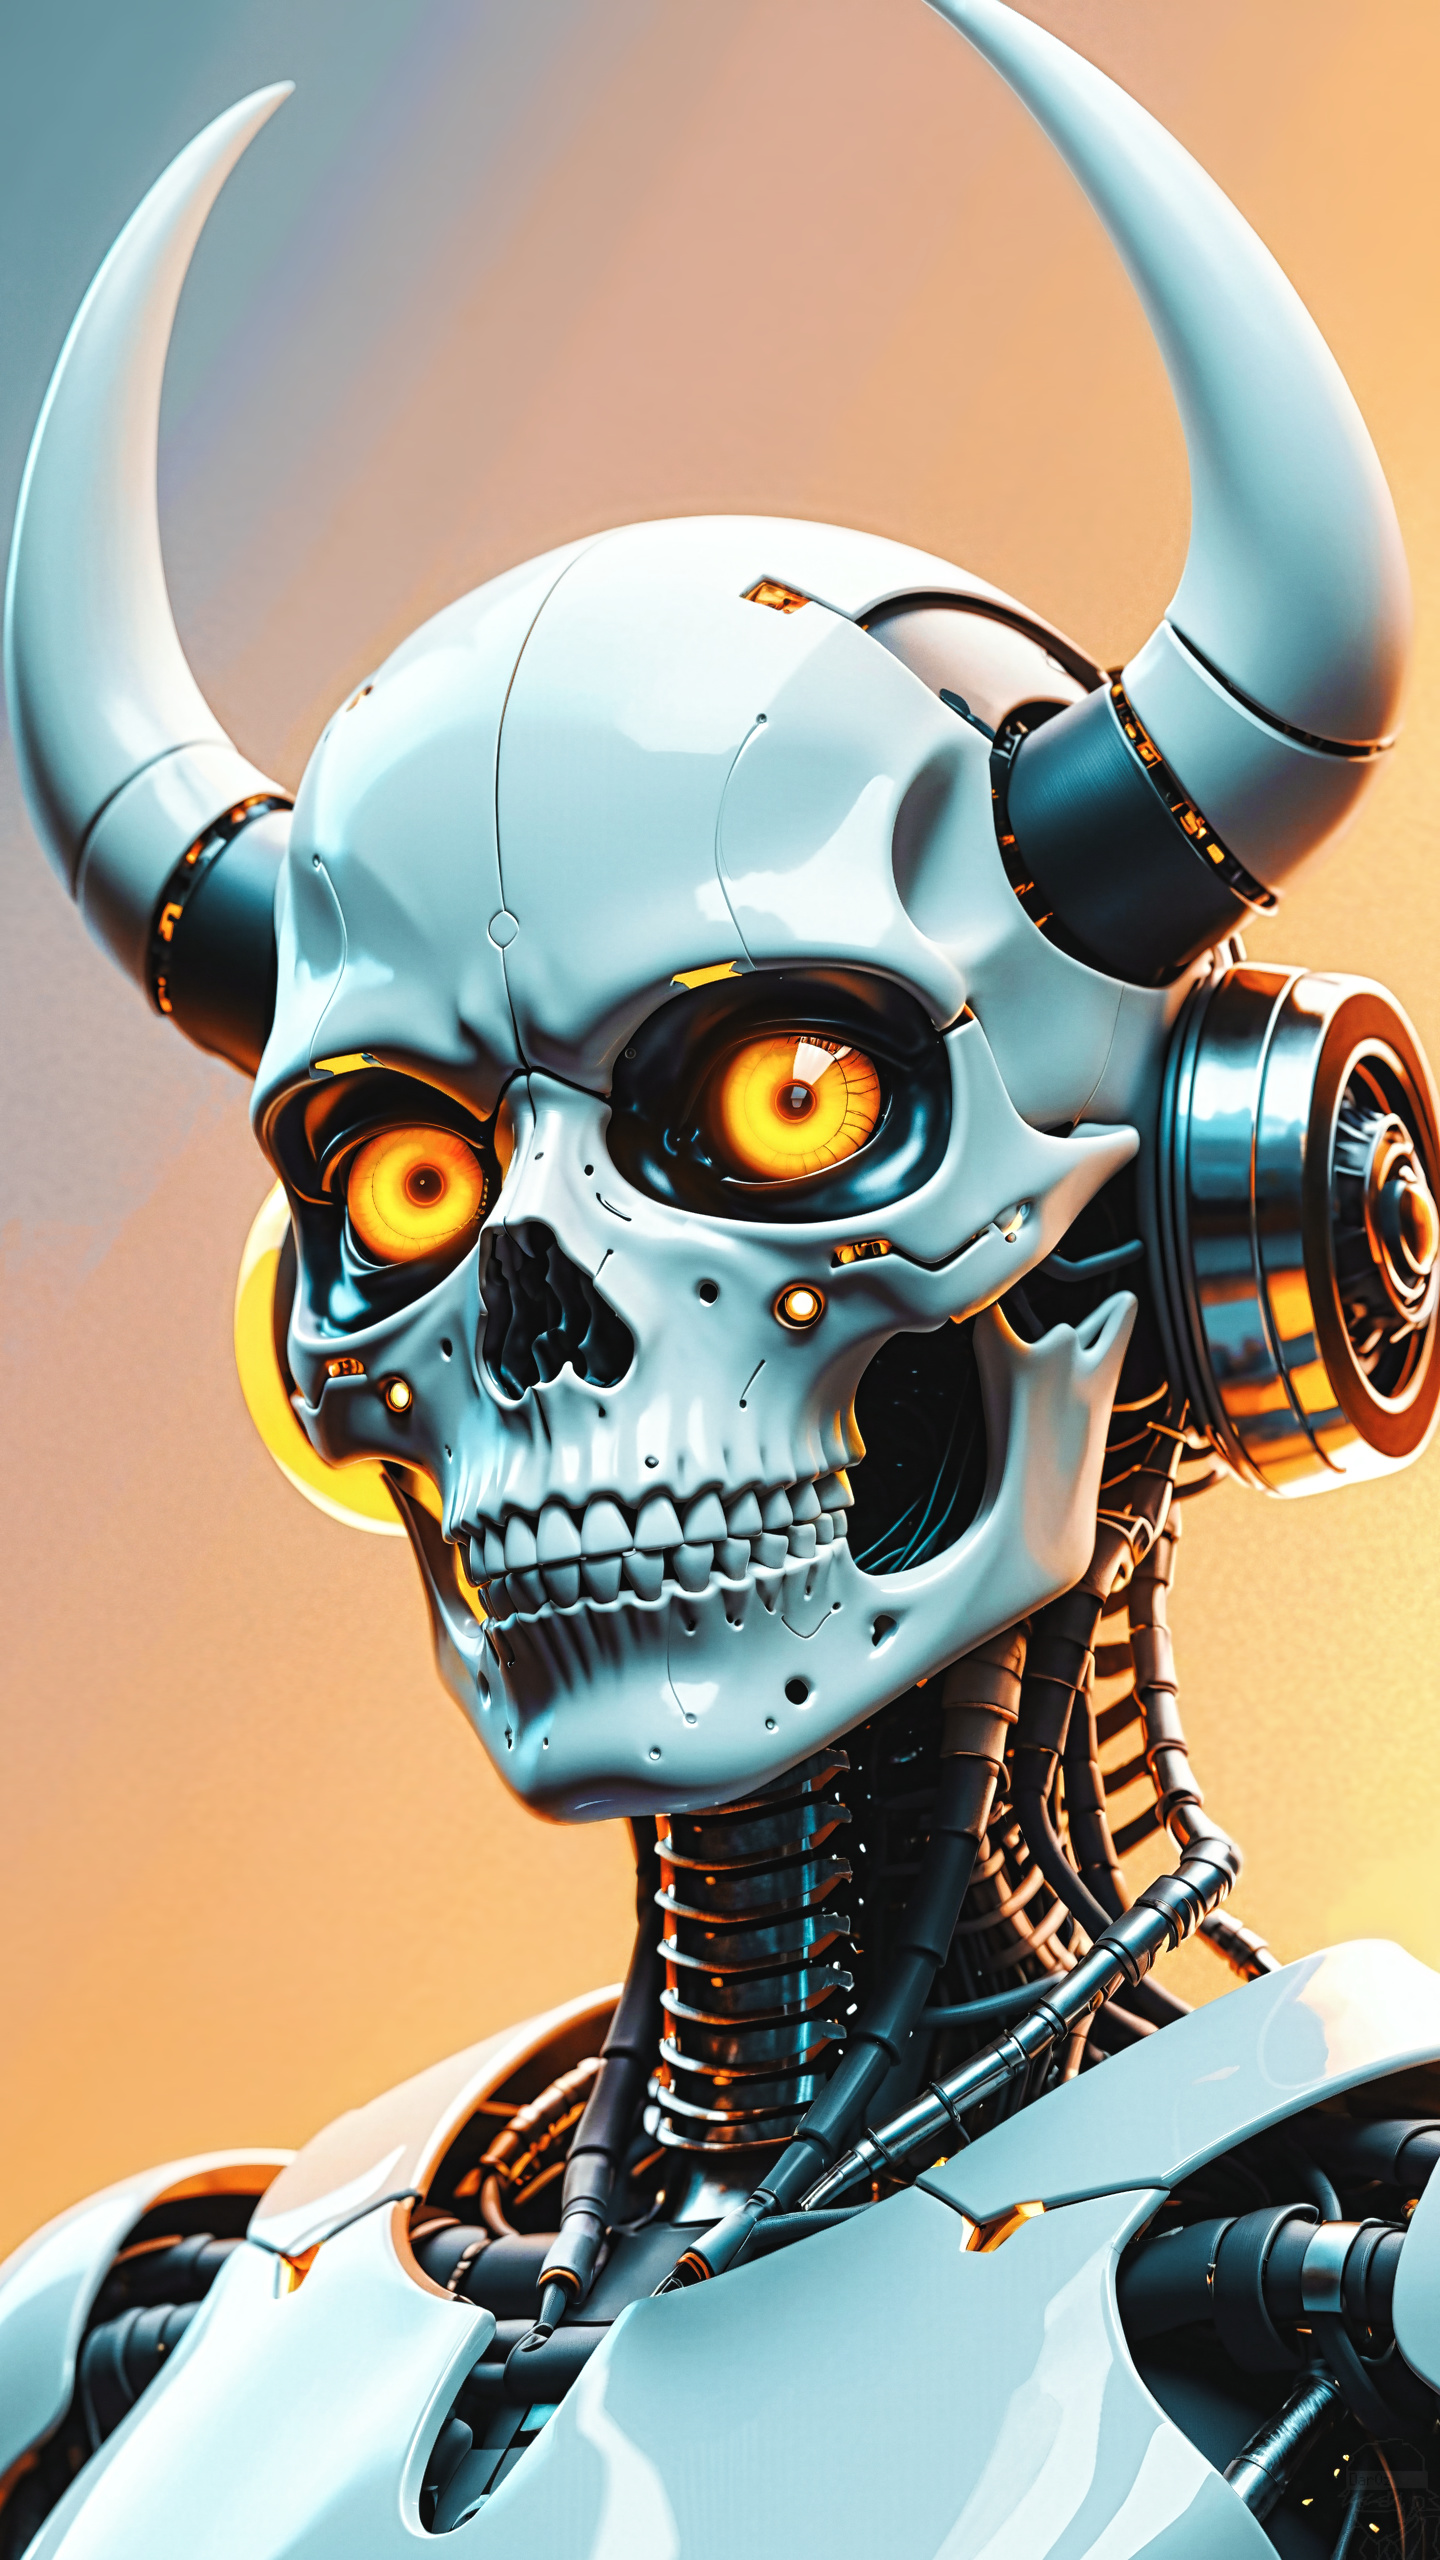 General 1440x2560 AI art dar0z digital art artwork horns metal creature demon robot yellow eyes cables pieces teeth looking at viewer skull